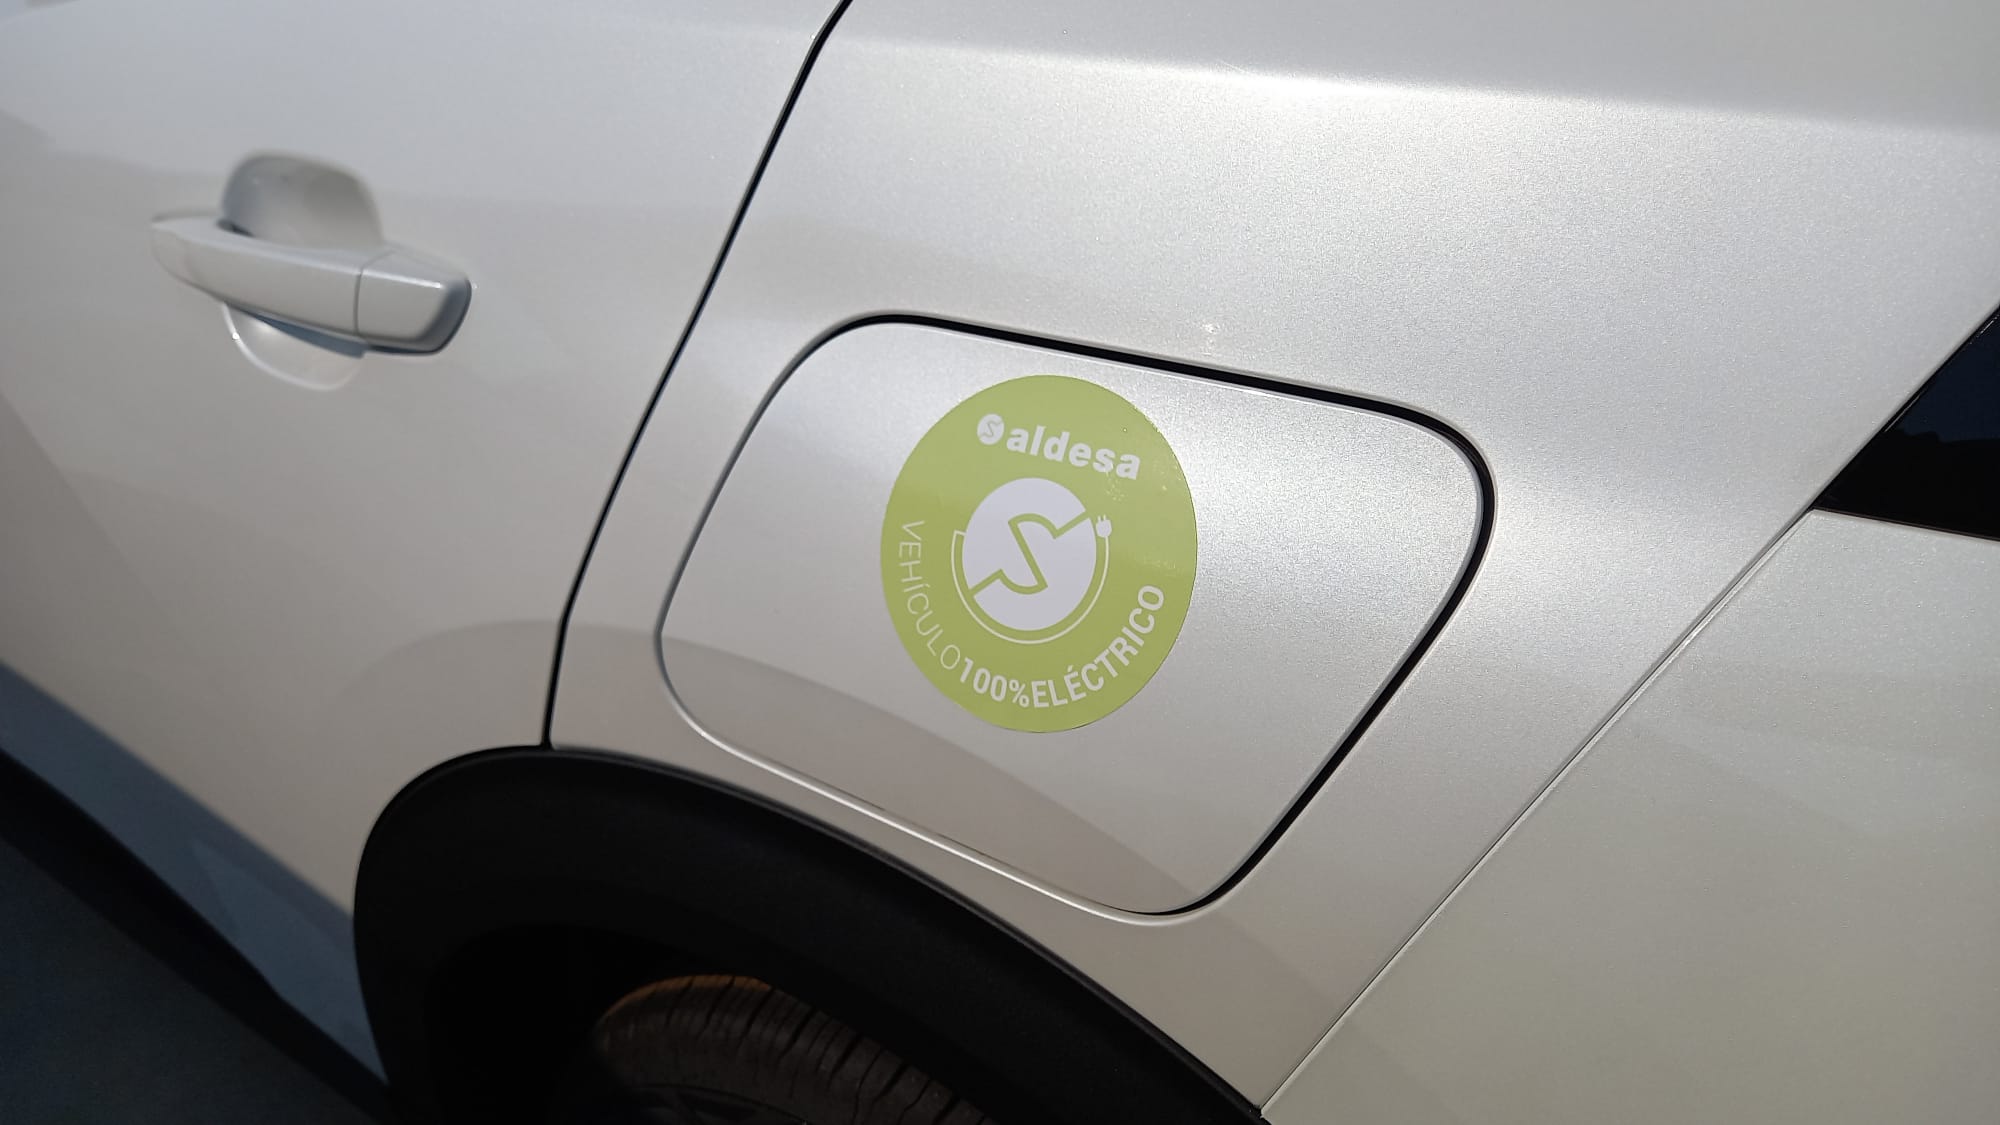 Aldesa - Aldesa bets on electric vehicles to renew its fleet